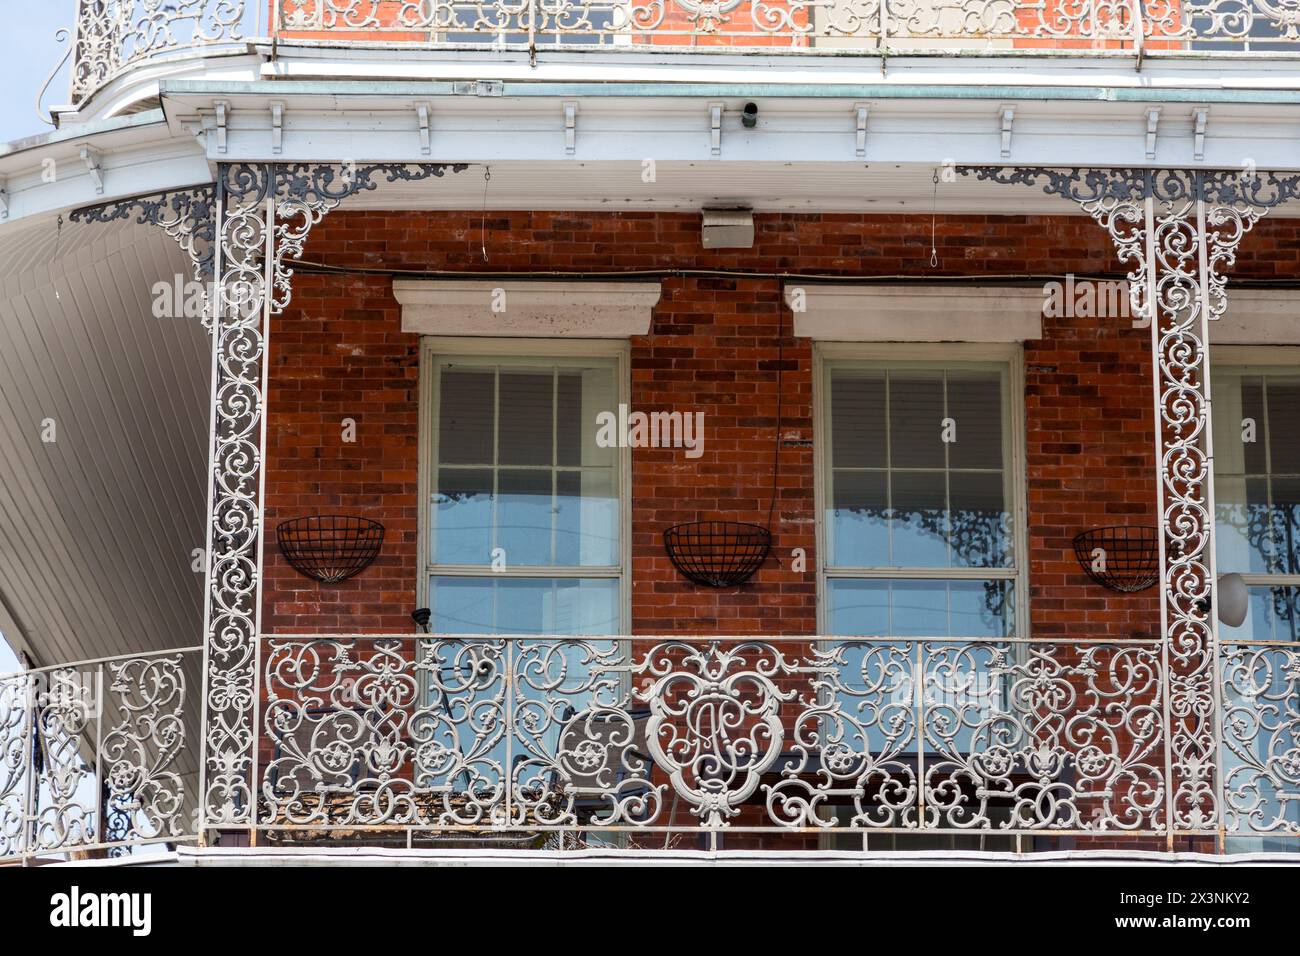 New Orleans, Louisiana. French Quarter, dekoratives Grillwerk am Pontalba Building, erbaut 1851. Stockfoto